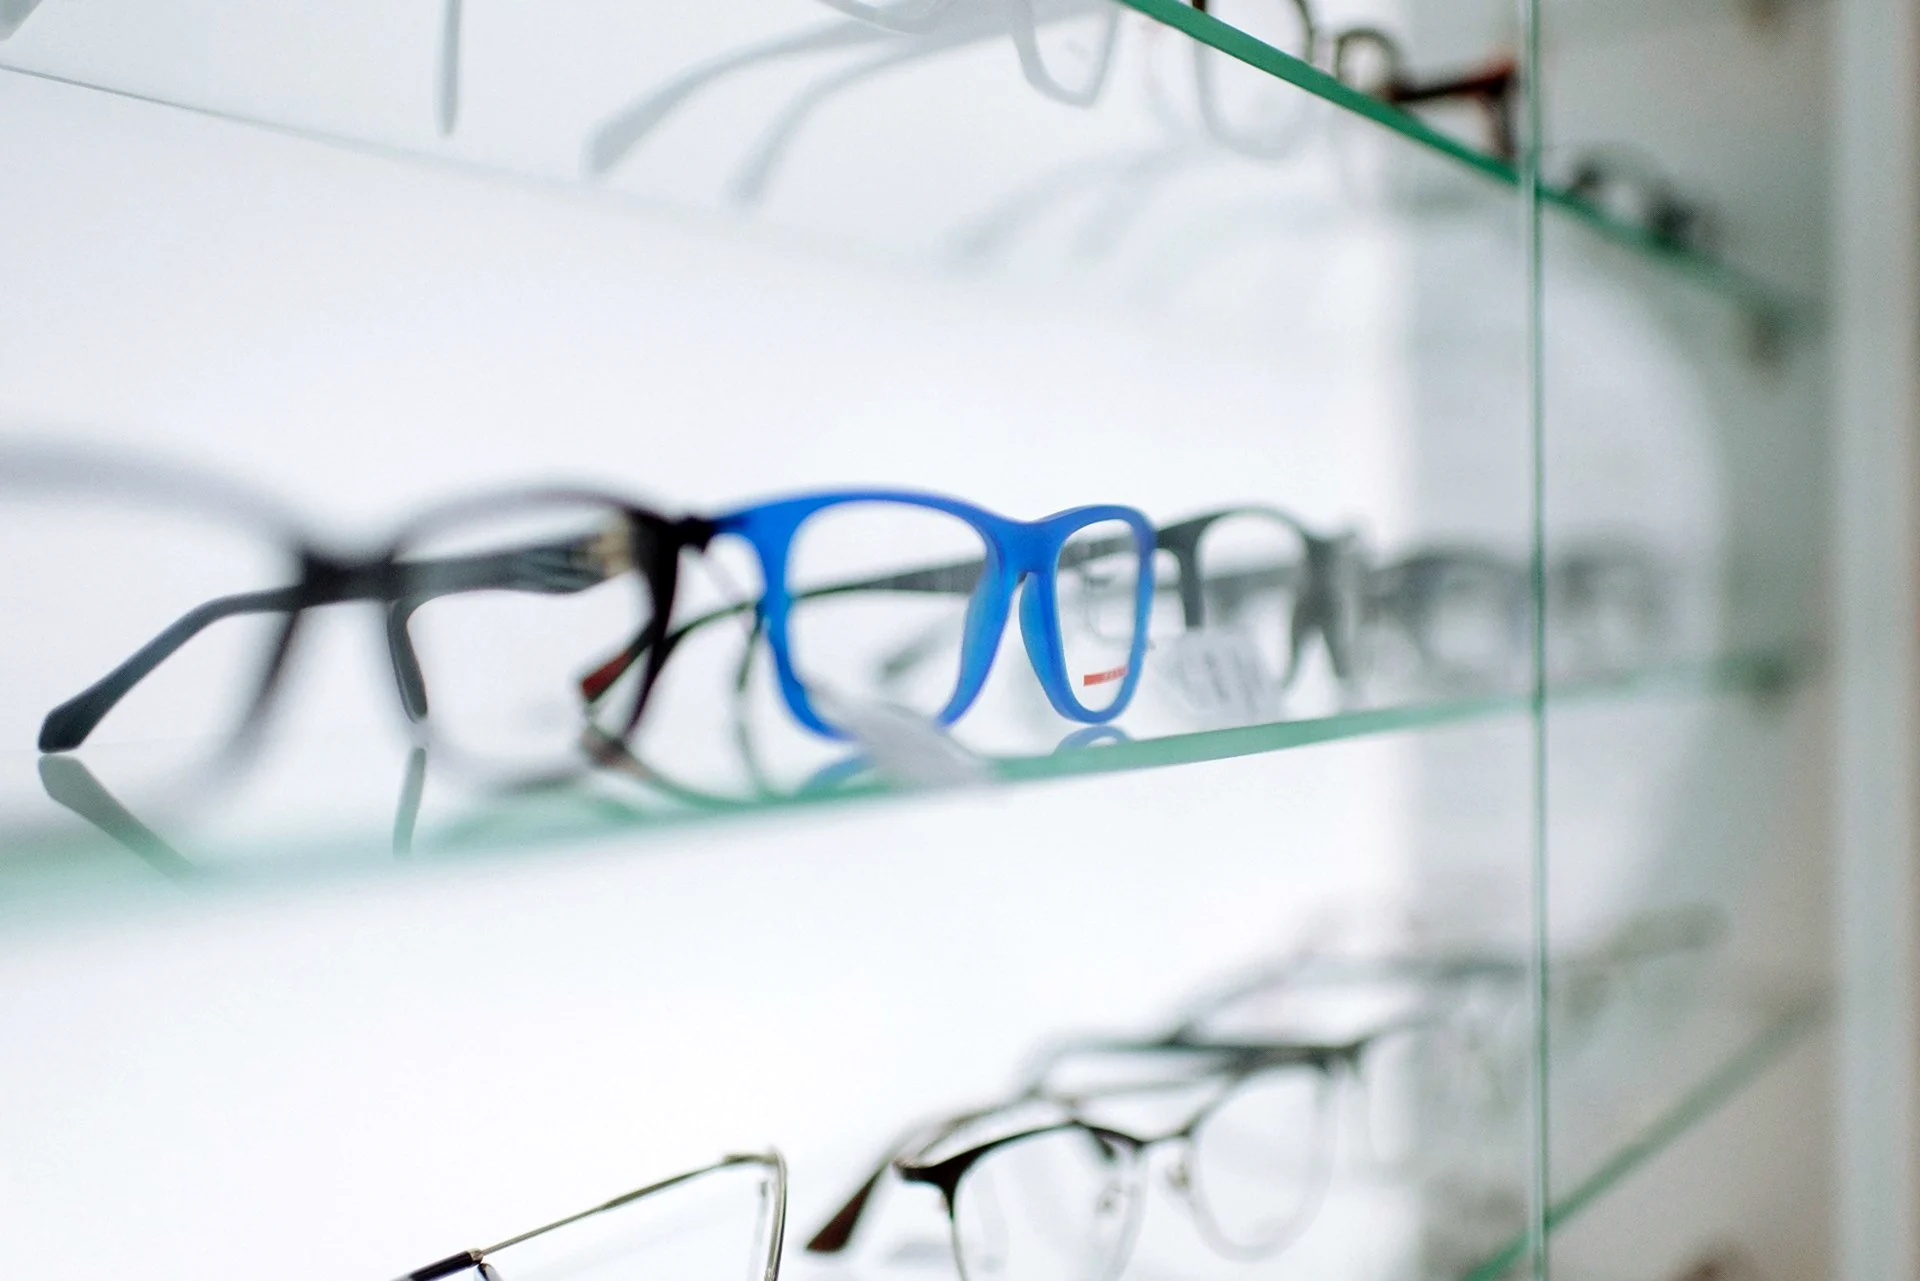 Оптика очки. Реклама оправы для очков. Салон оптики очки. Оптика очки реклама.